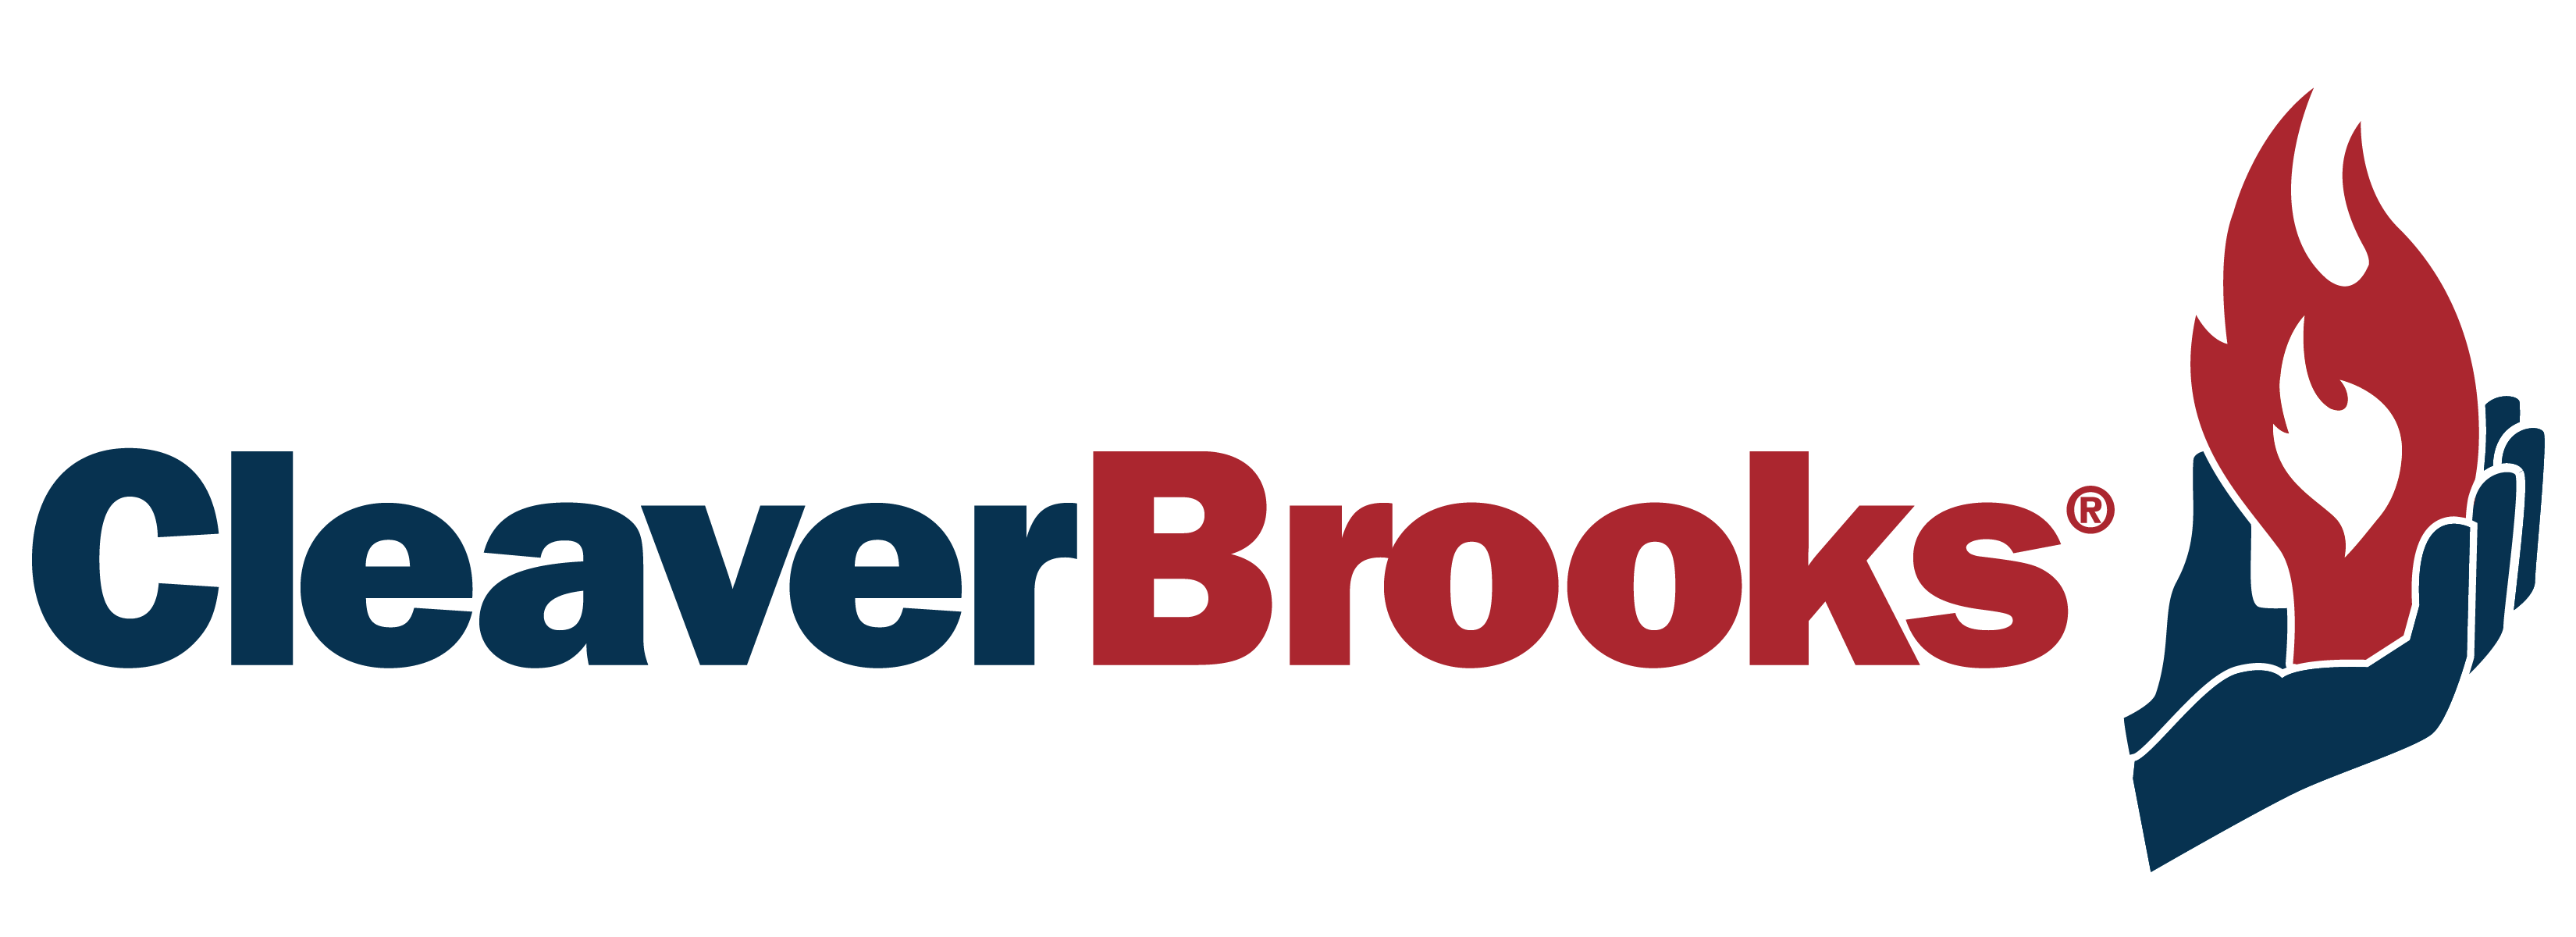 Cleaver Brooks Logo